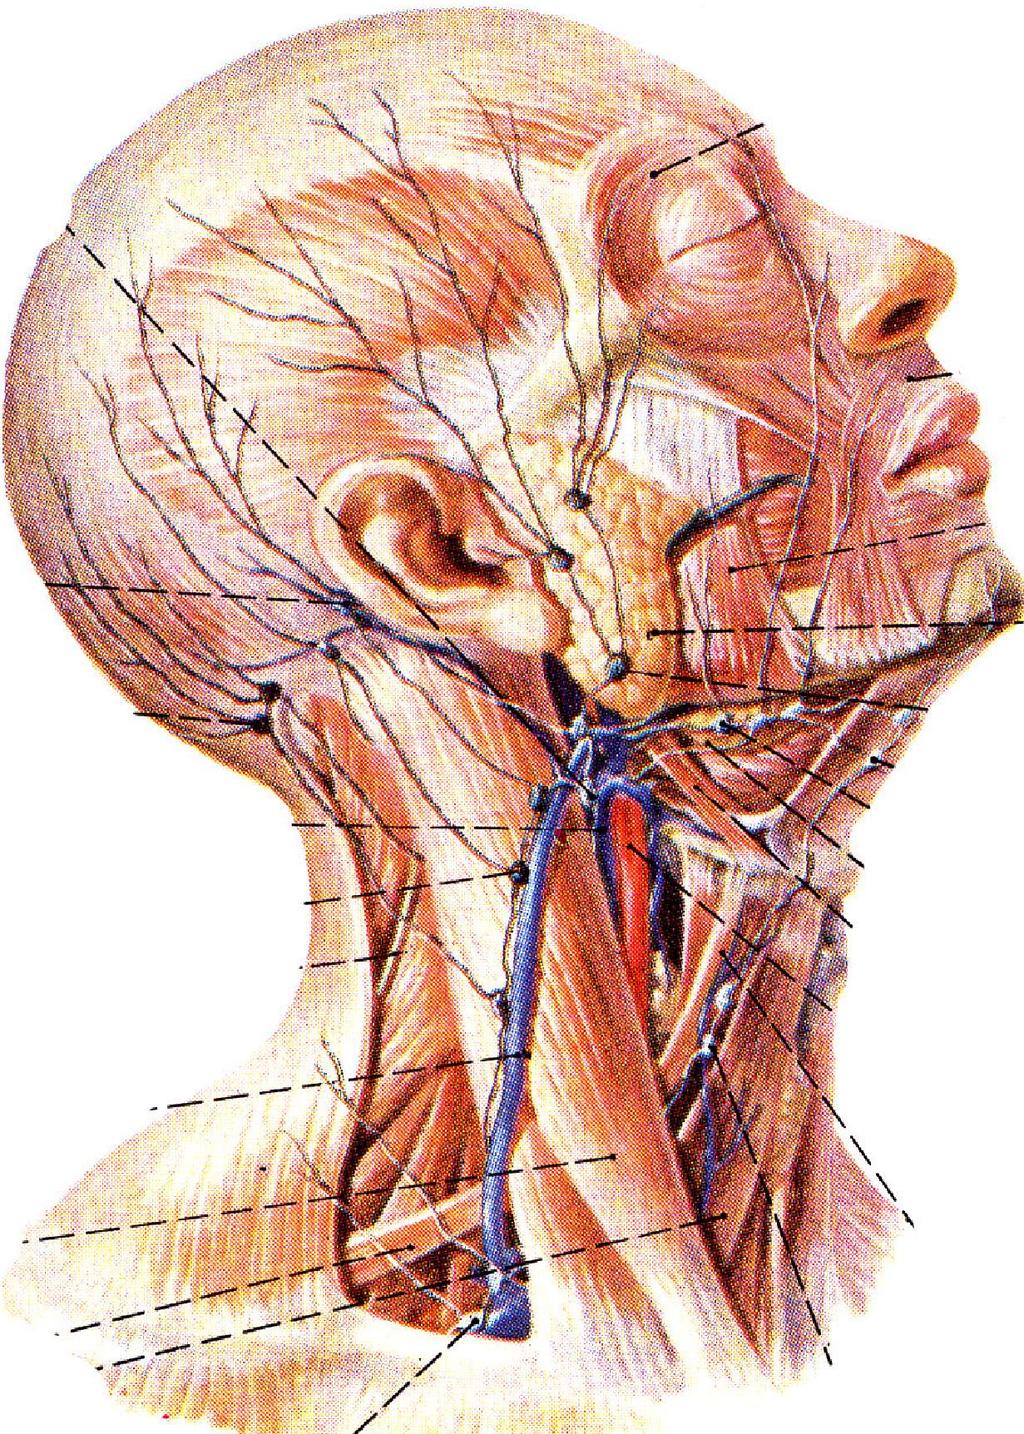 Lymphatic vessel & lymph nodes of head & neck Location: juncture of head & neck,around the vein & around digestive &